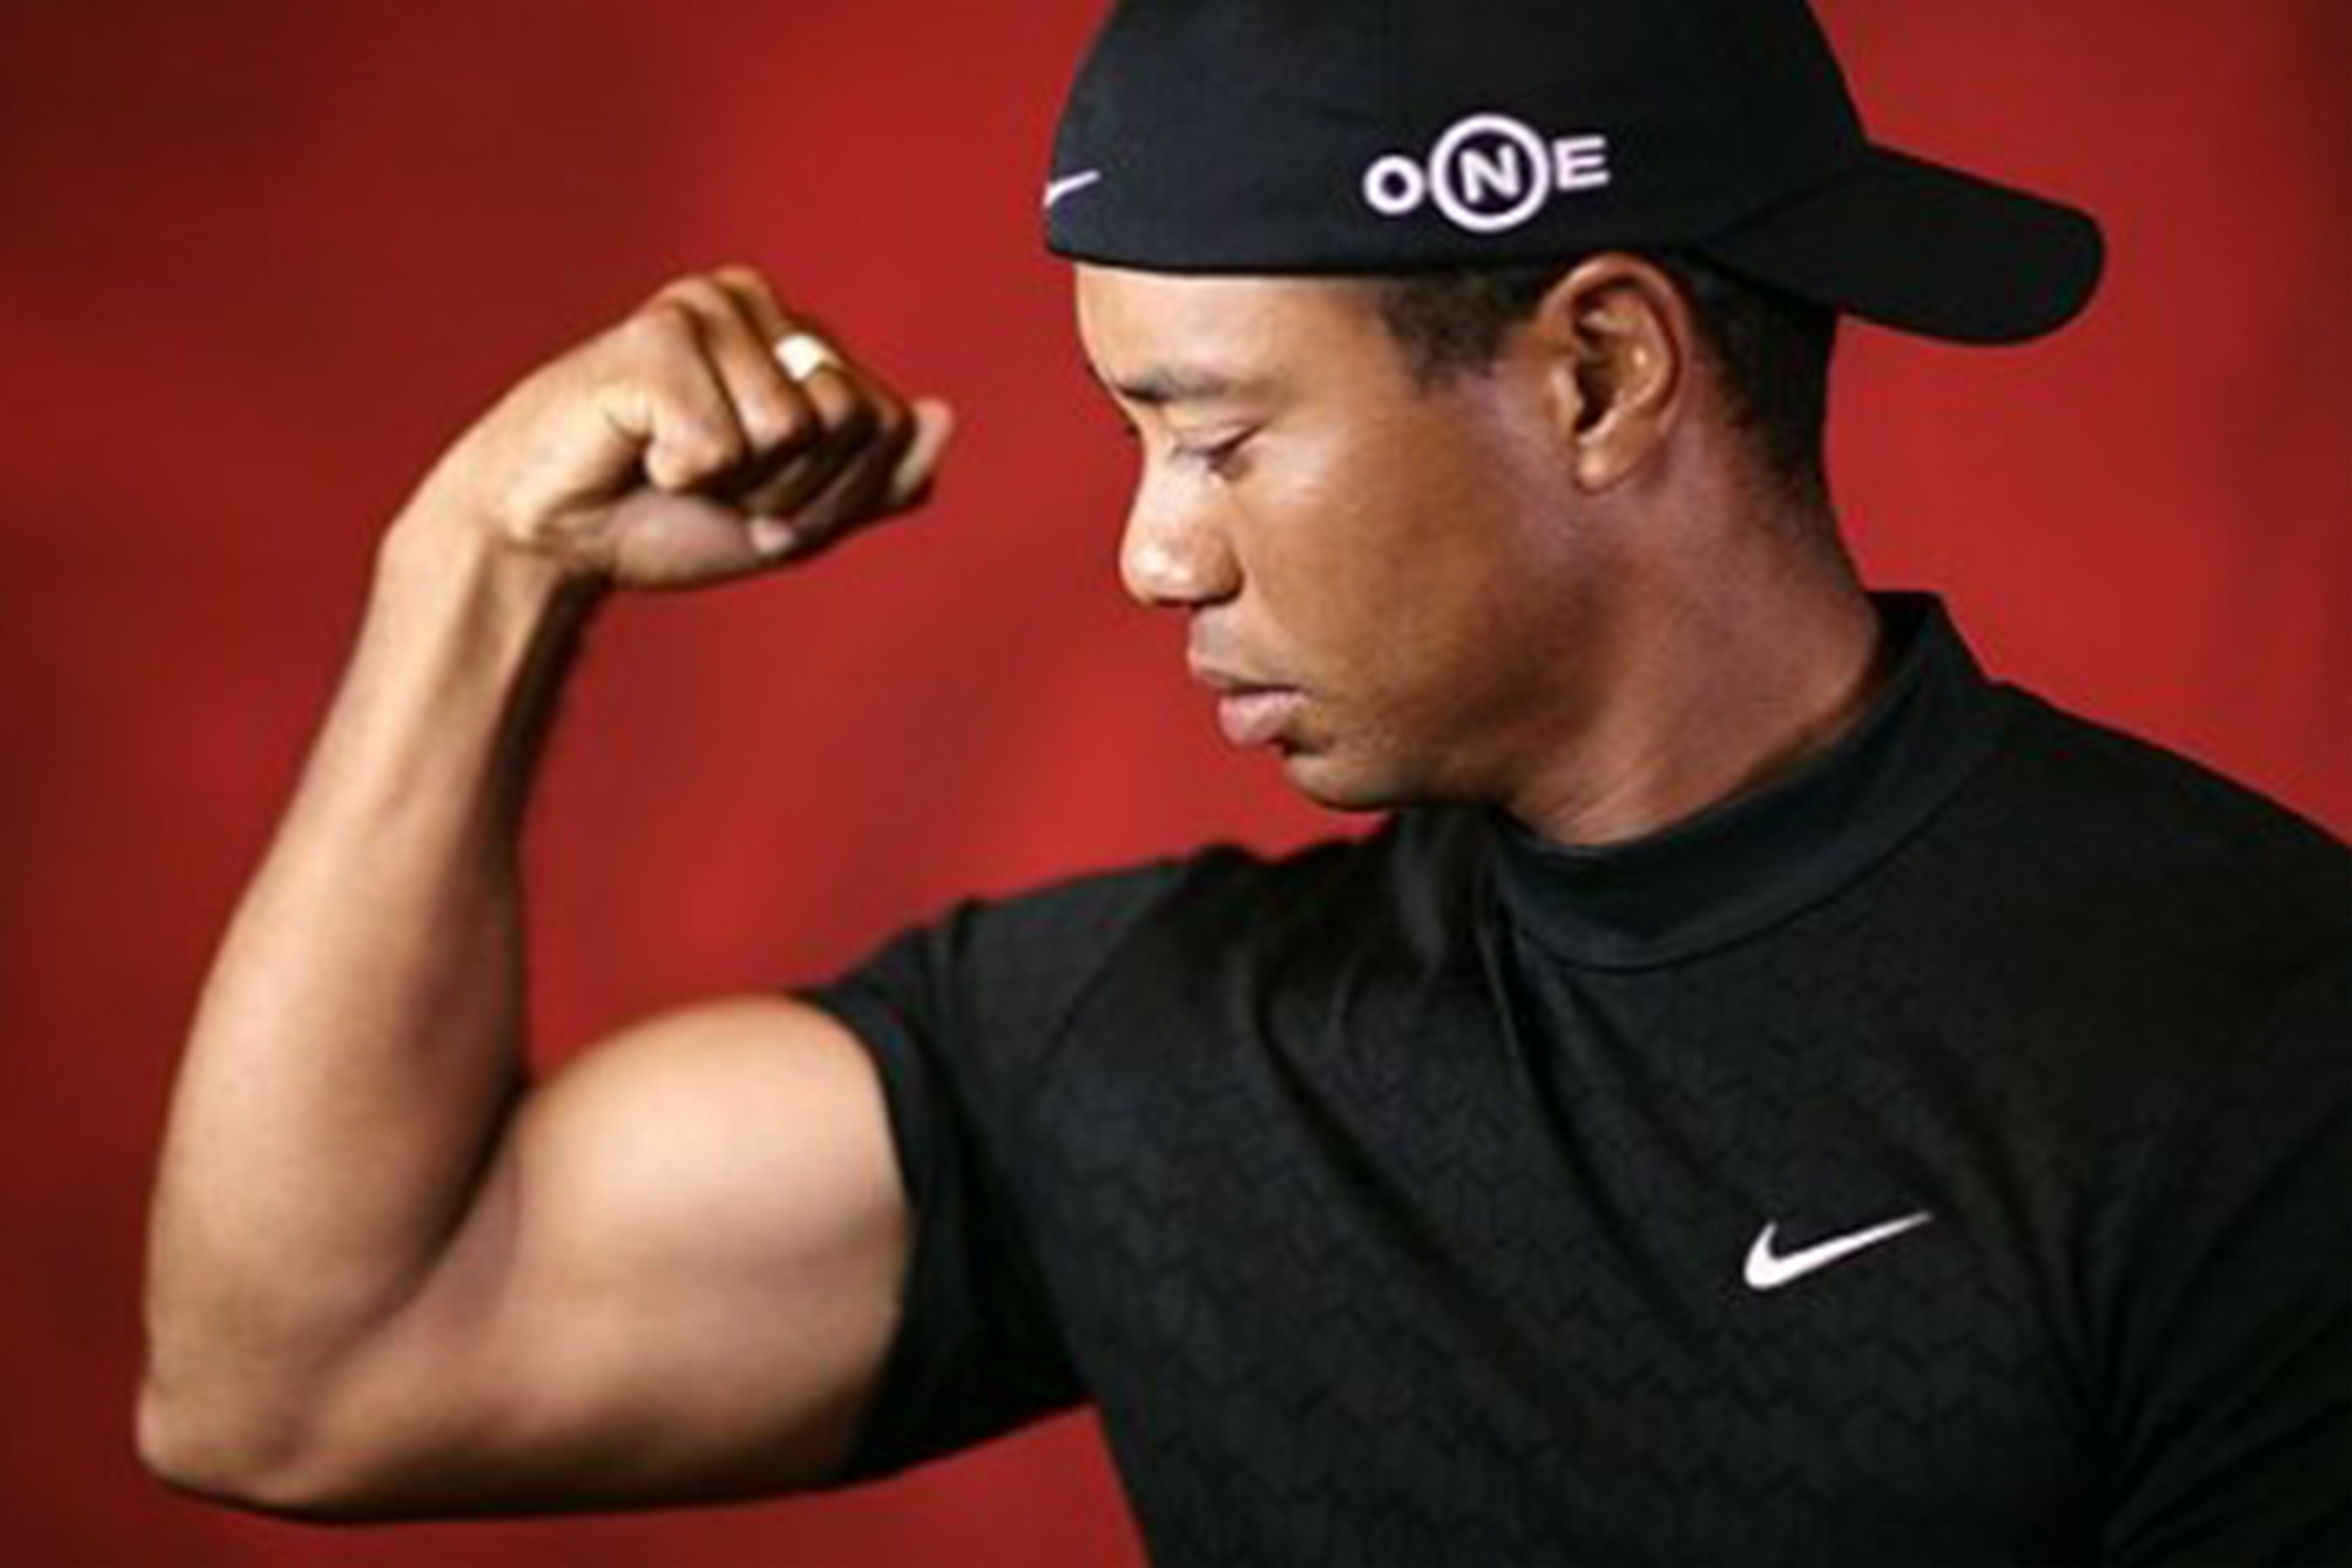 Tiger Woods flexing his arm